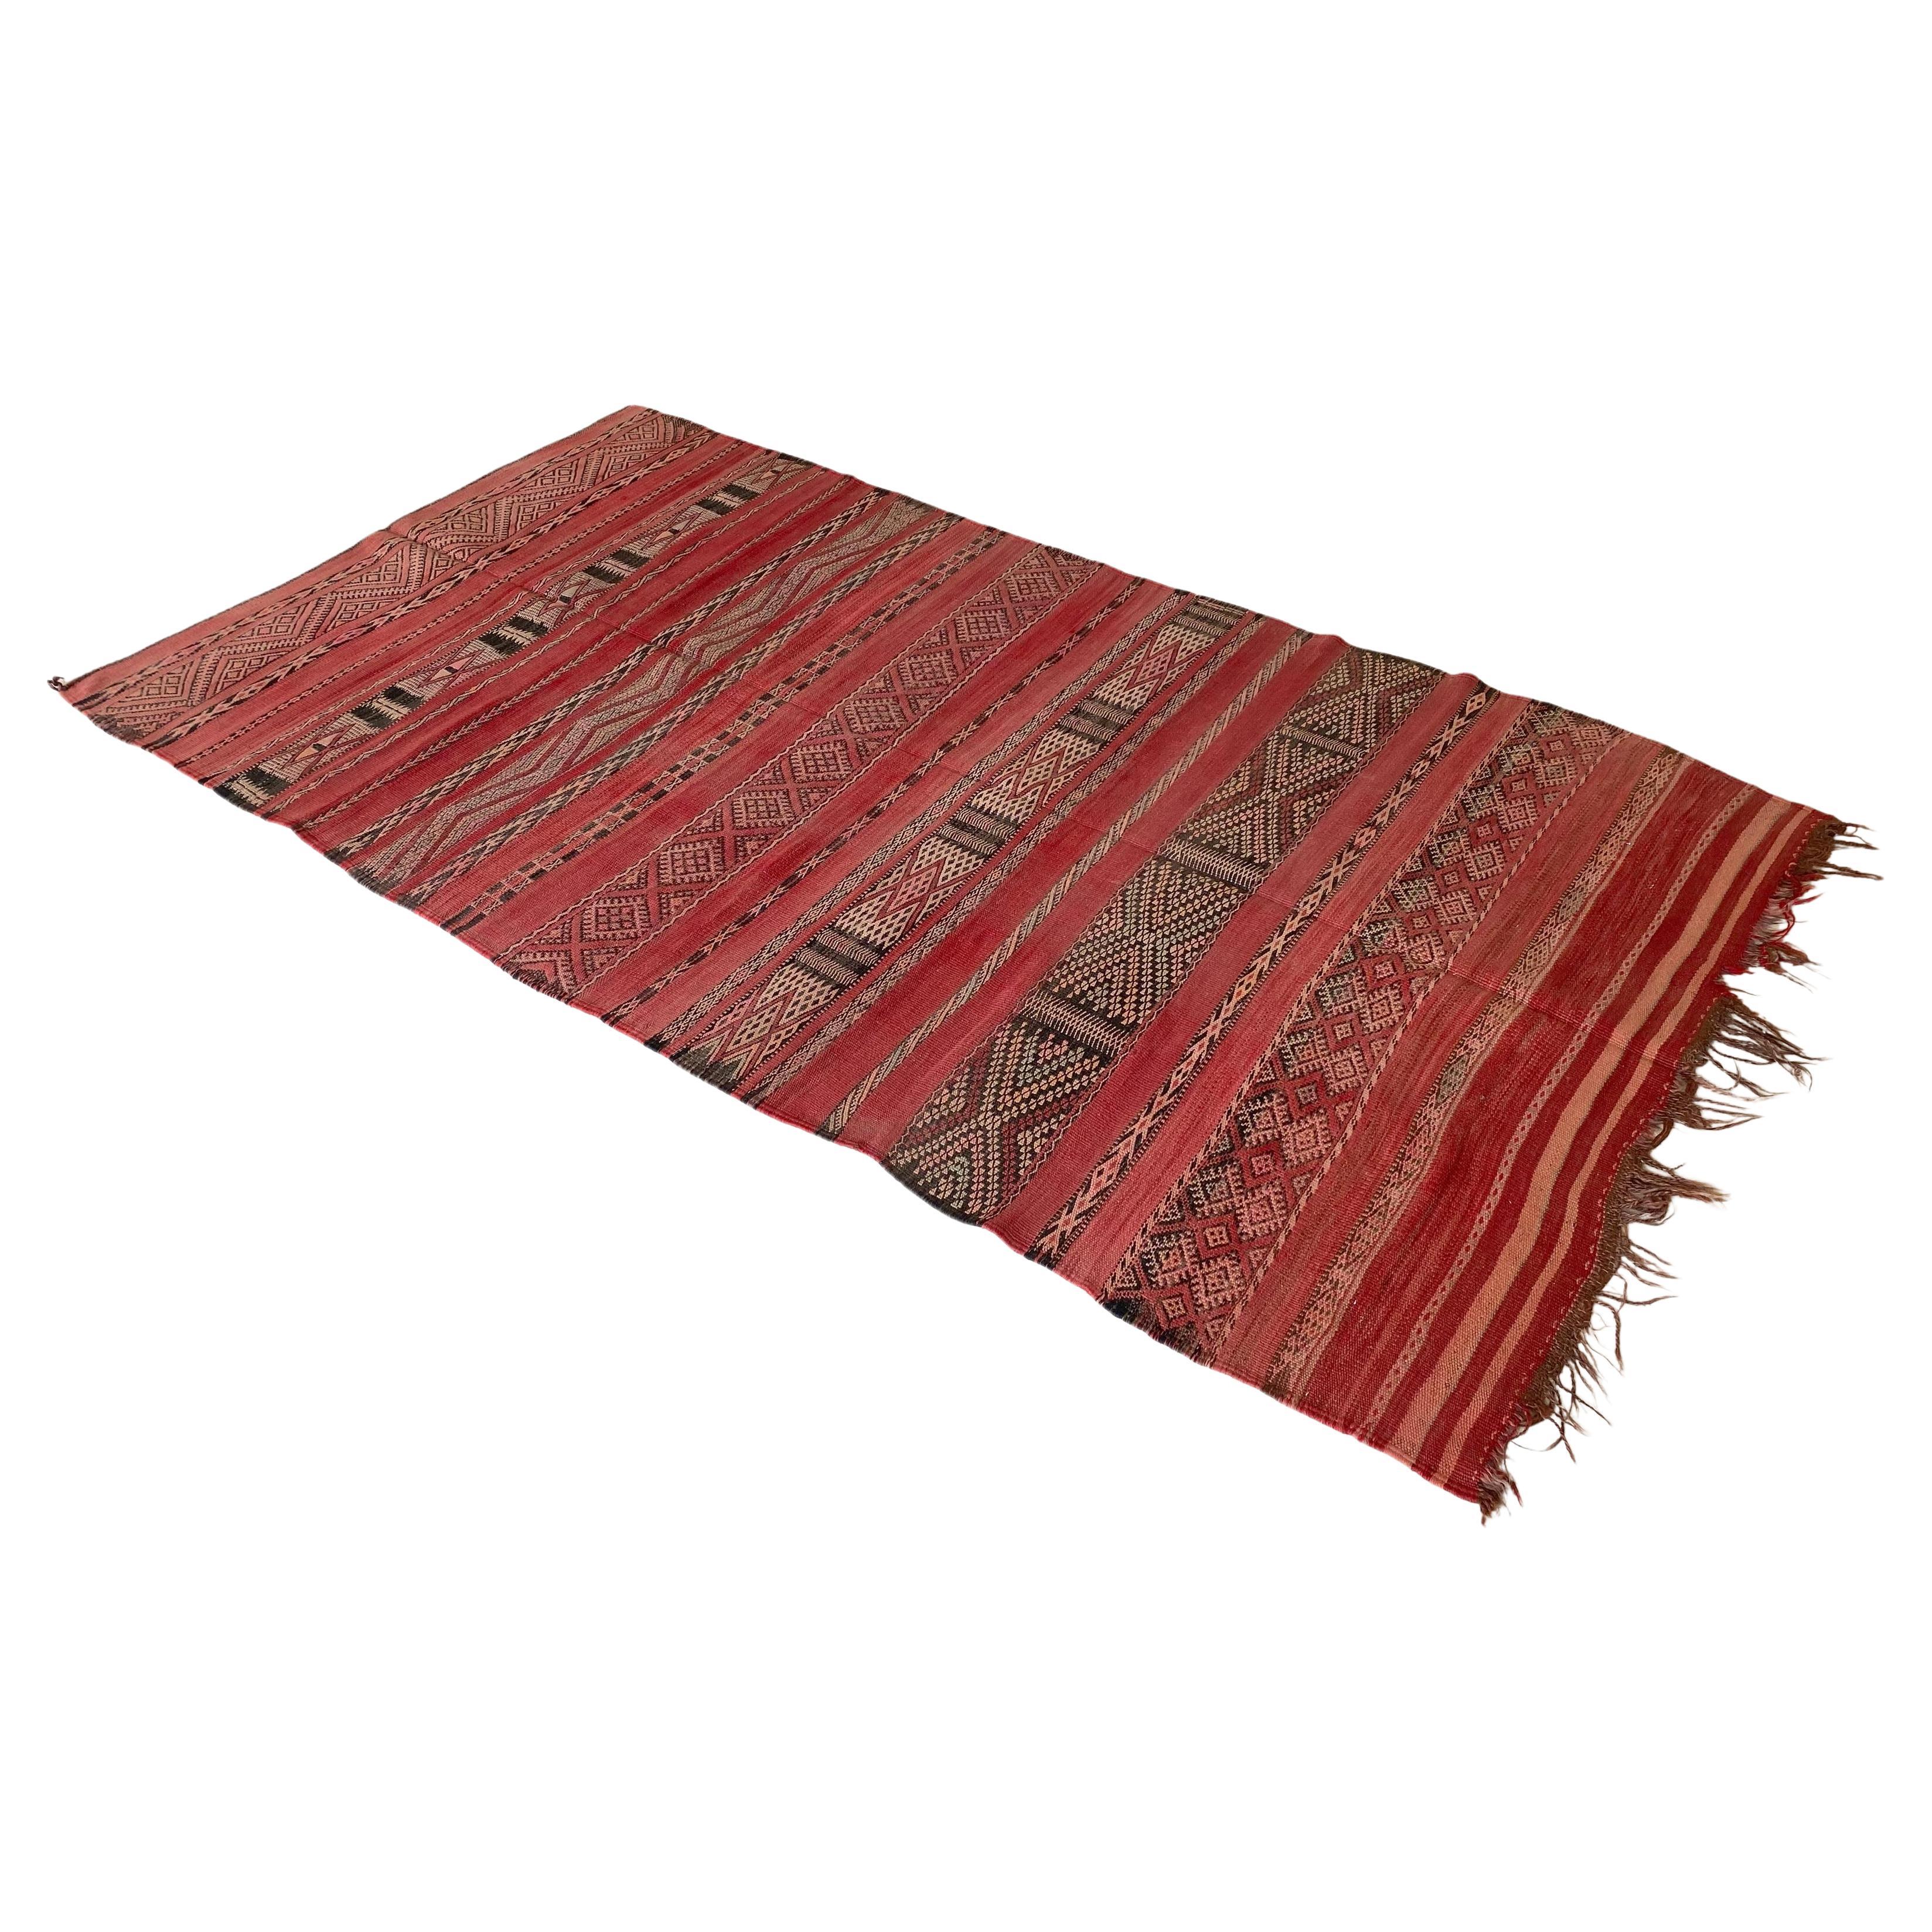 Vintage Moroccan Kilim rug - Red - 5x9.2feet / 152x282cm For Sale